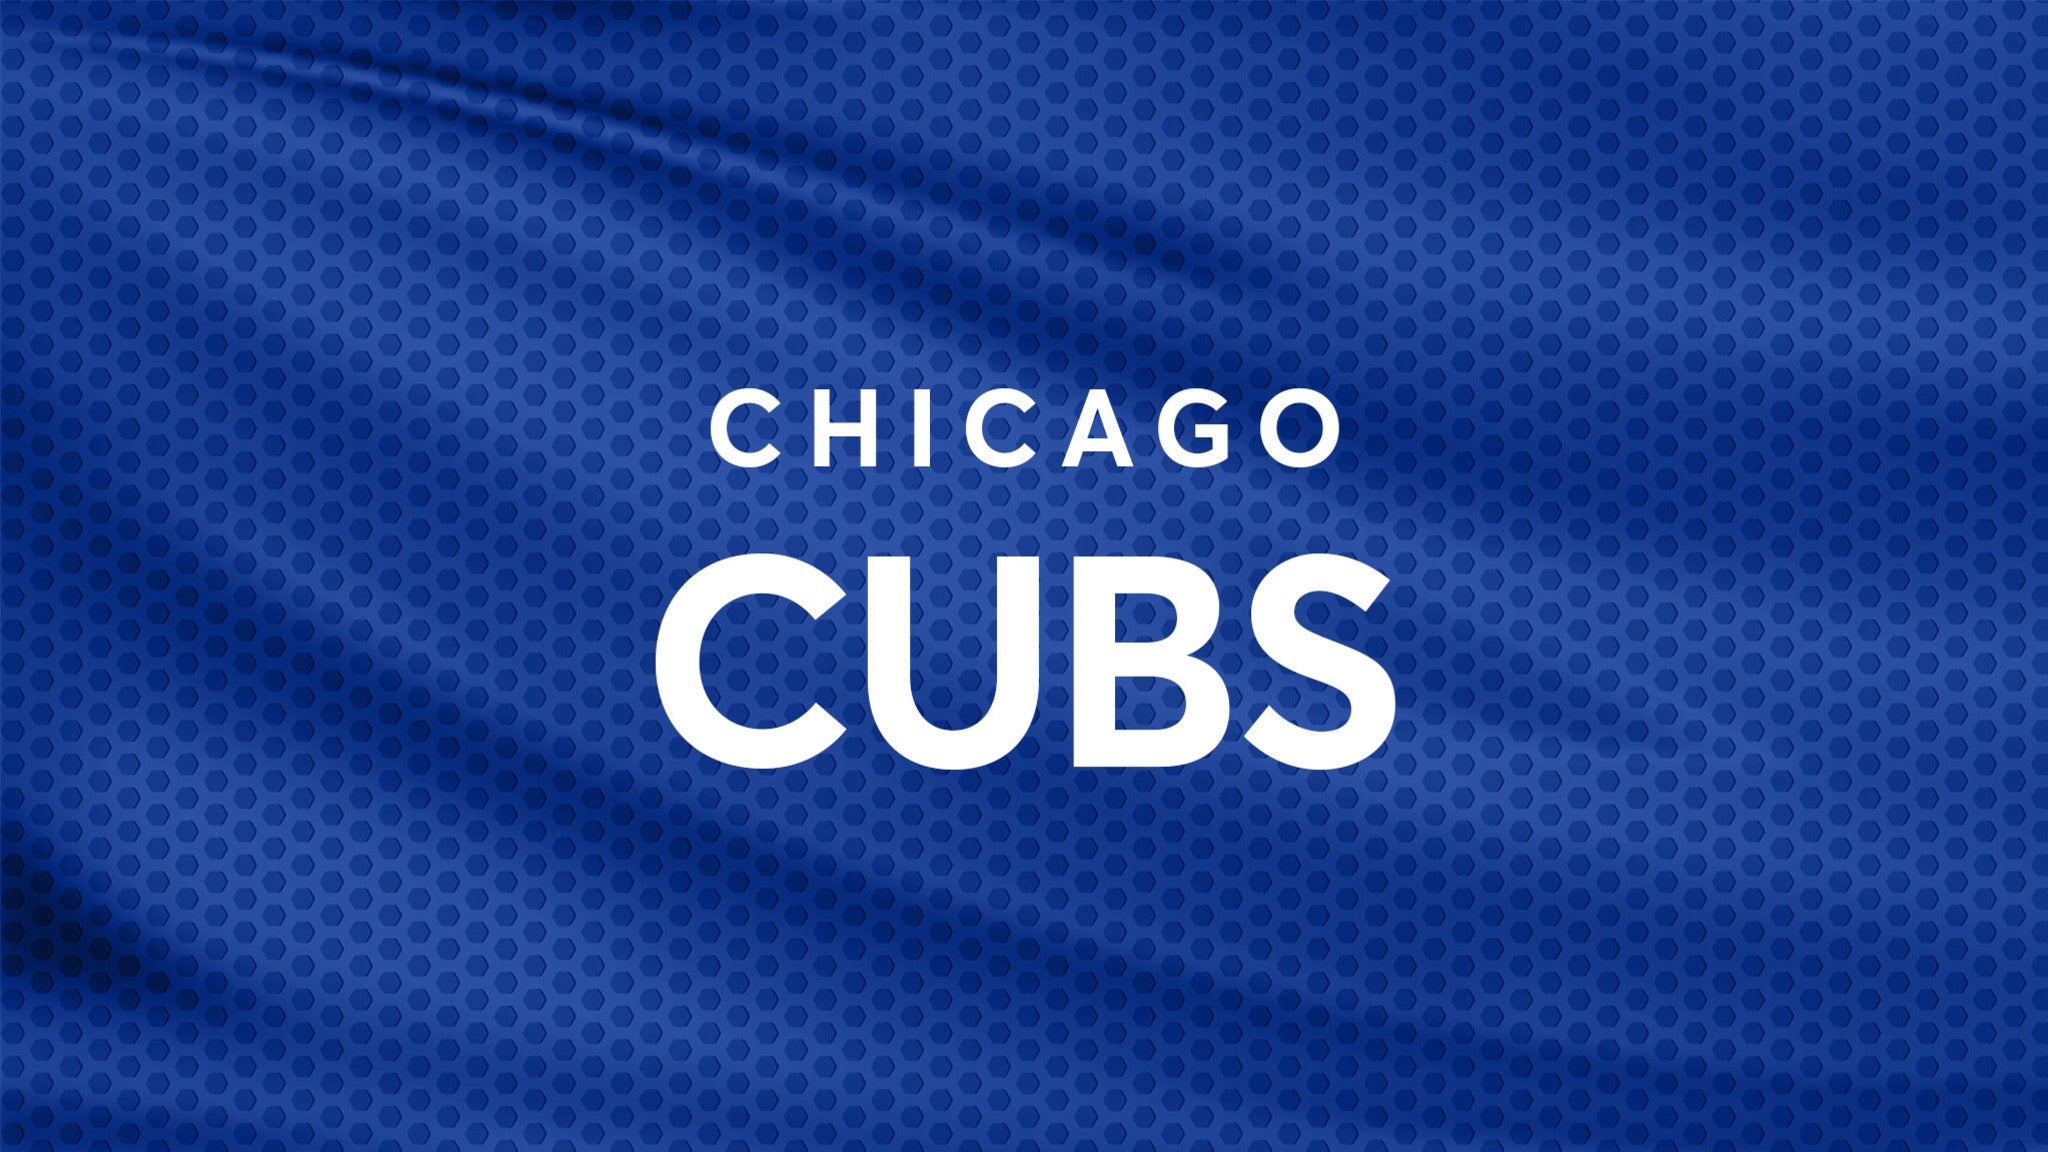 Chicago Cubs vs. Kansas City Royals